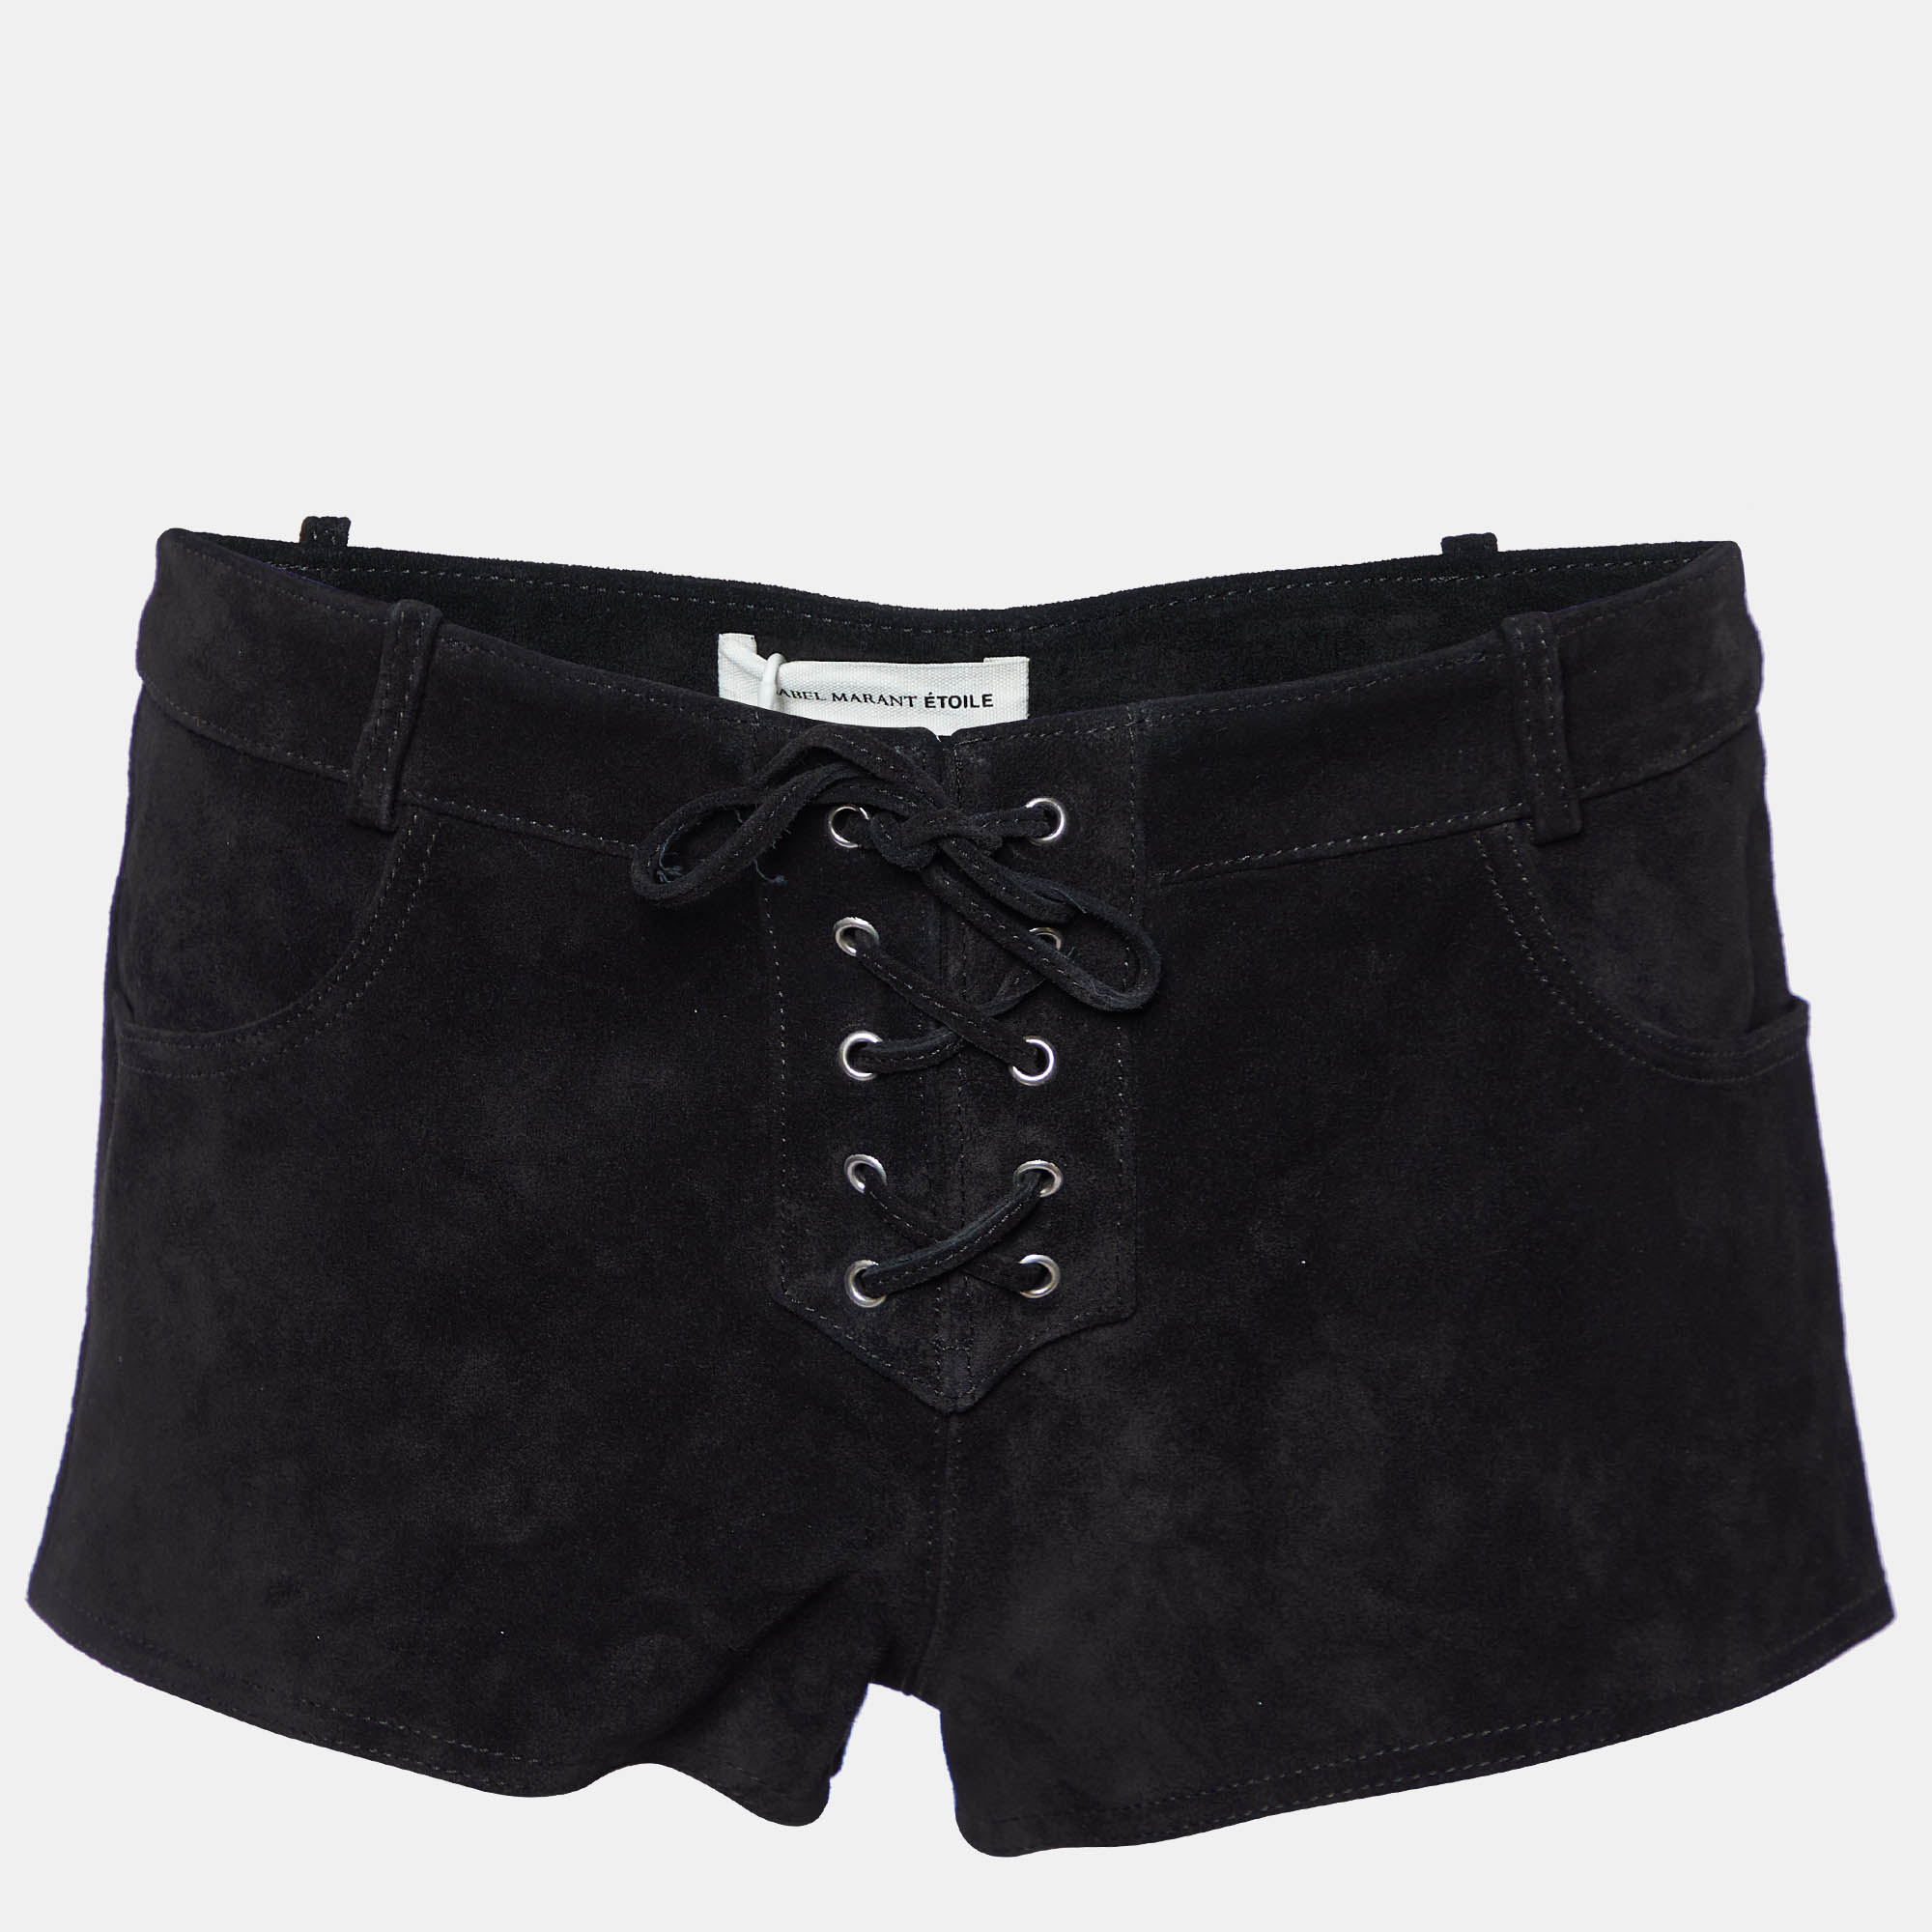 Isabel Marant Etoile Black Leather Suede Tie Detail Shorts S